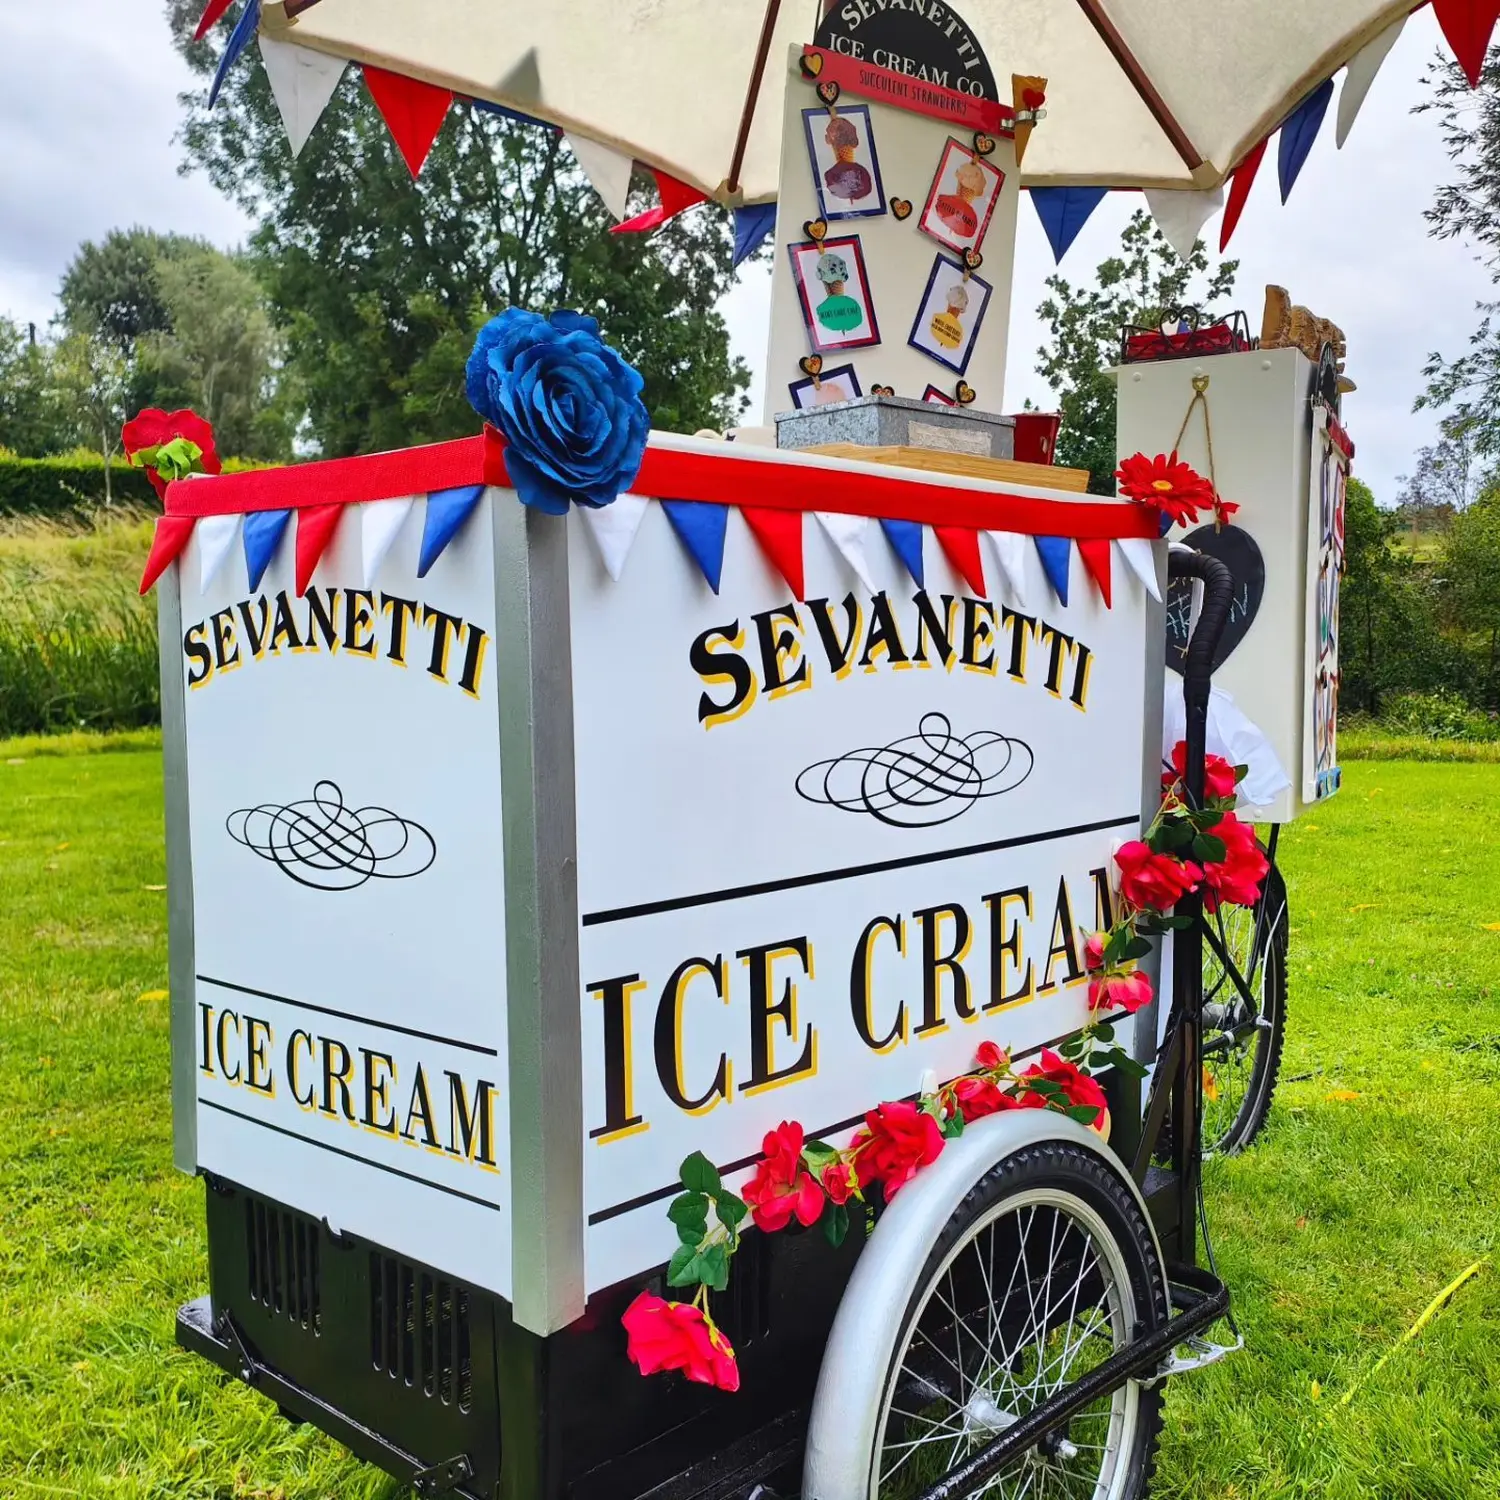 Sevanetti Ice Cream Bikes Red, White & Blue decoration sets